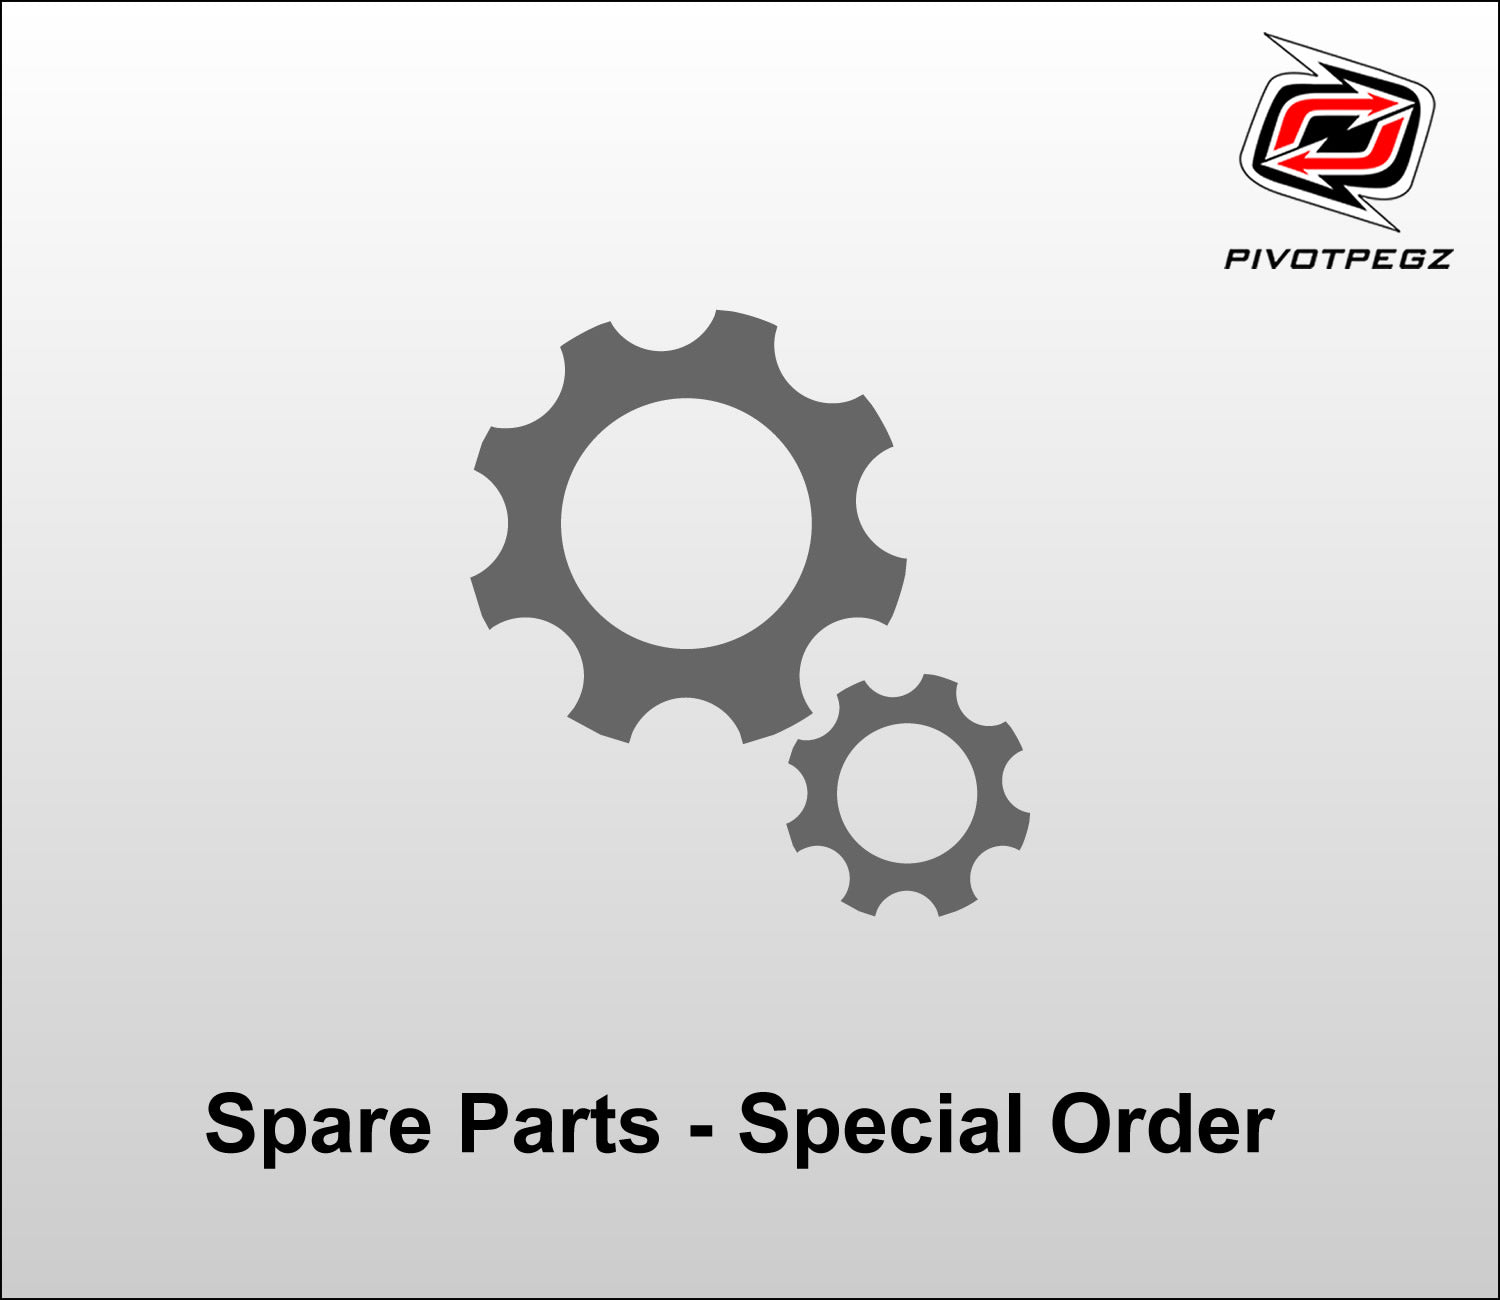 Spare Parts Special Order $15